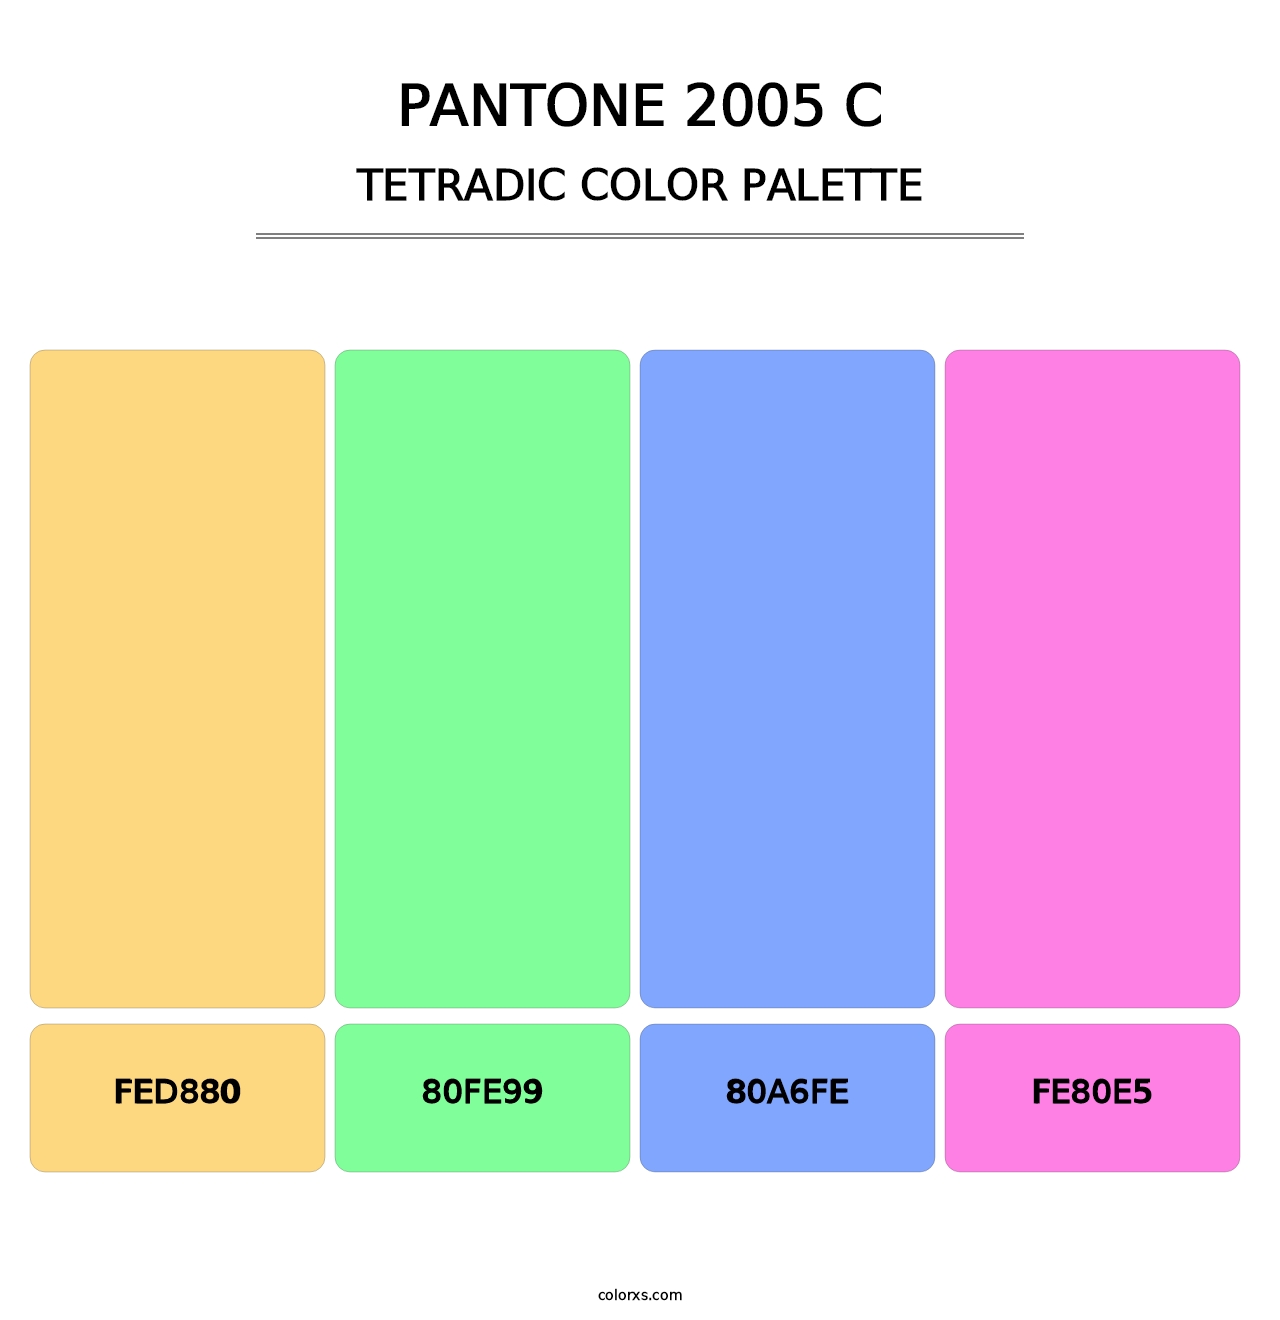 PANTONE 2005 C - Tetradic Color Palette